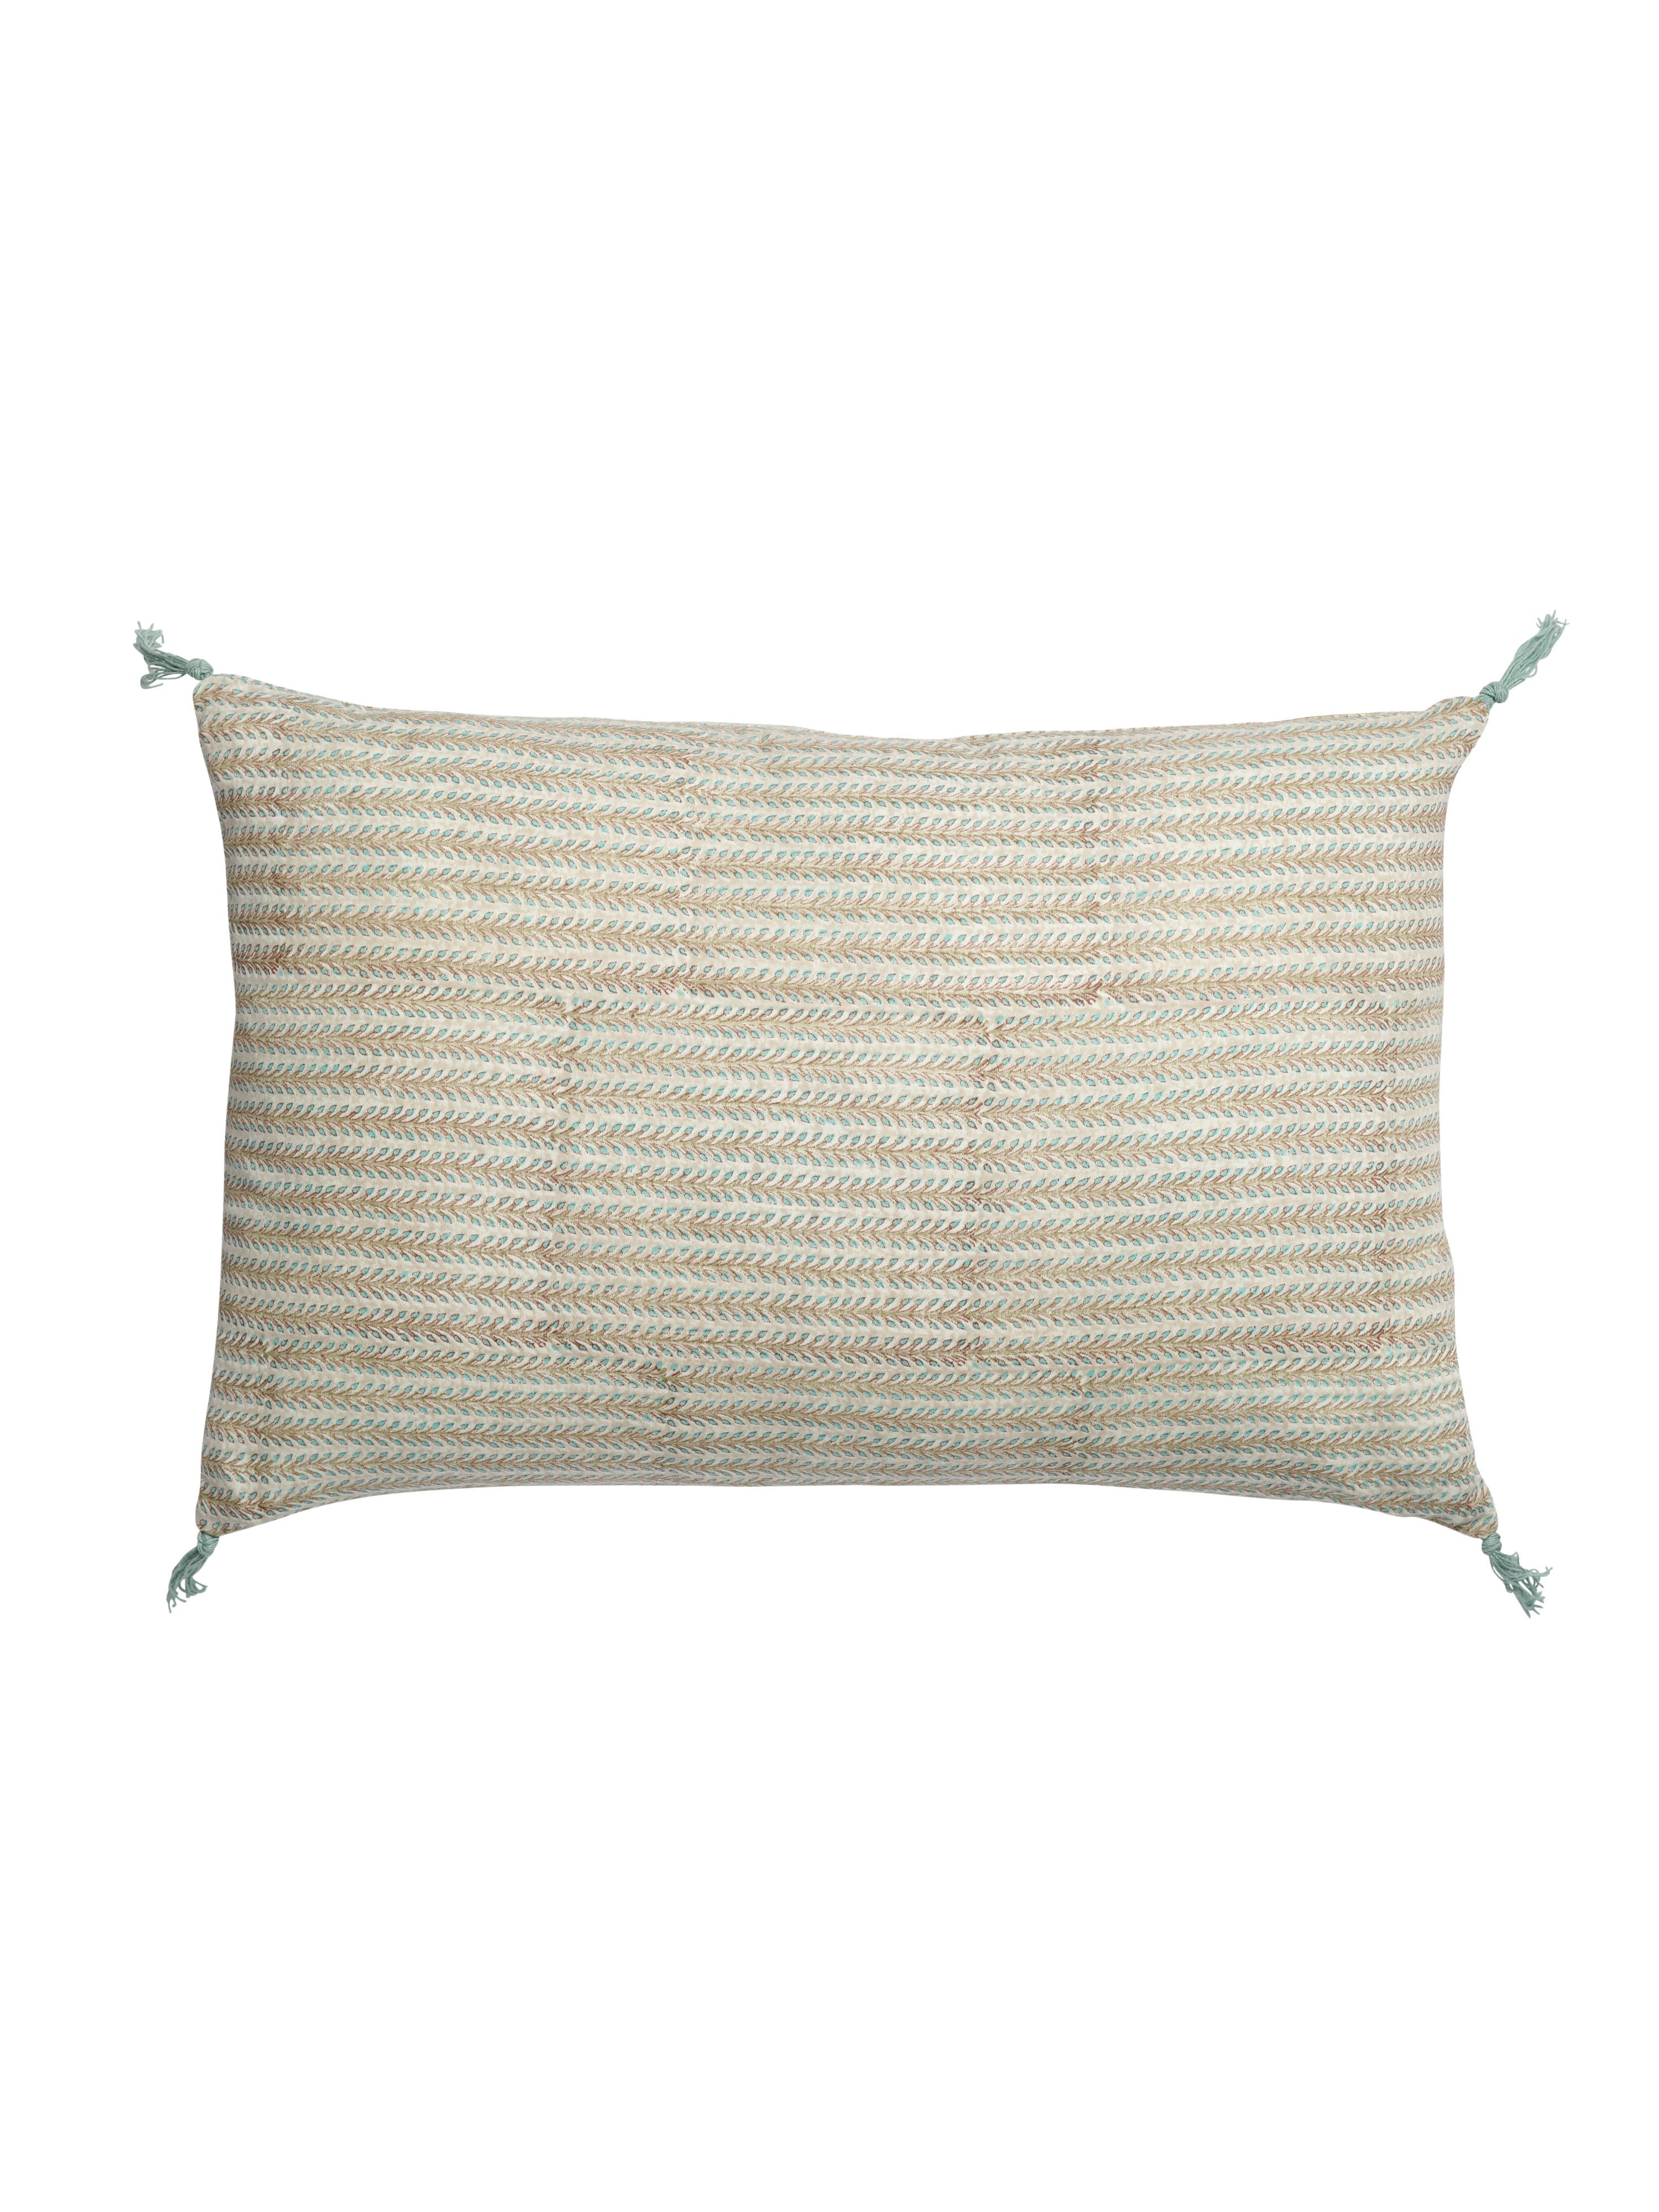 Cushion with tassels with Beige Leaf print